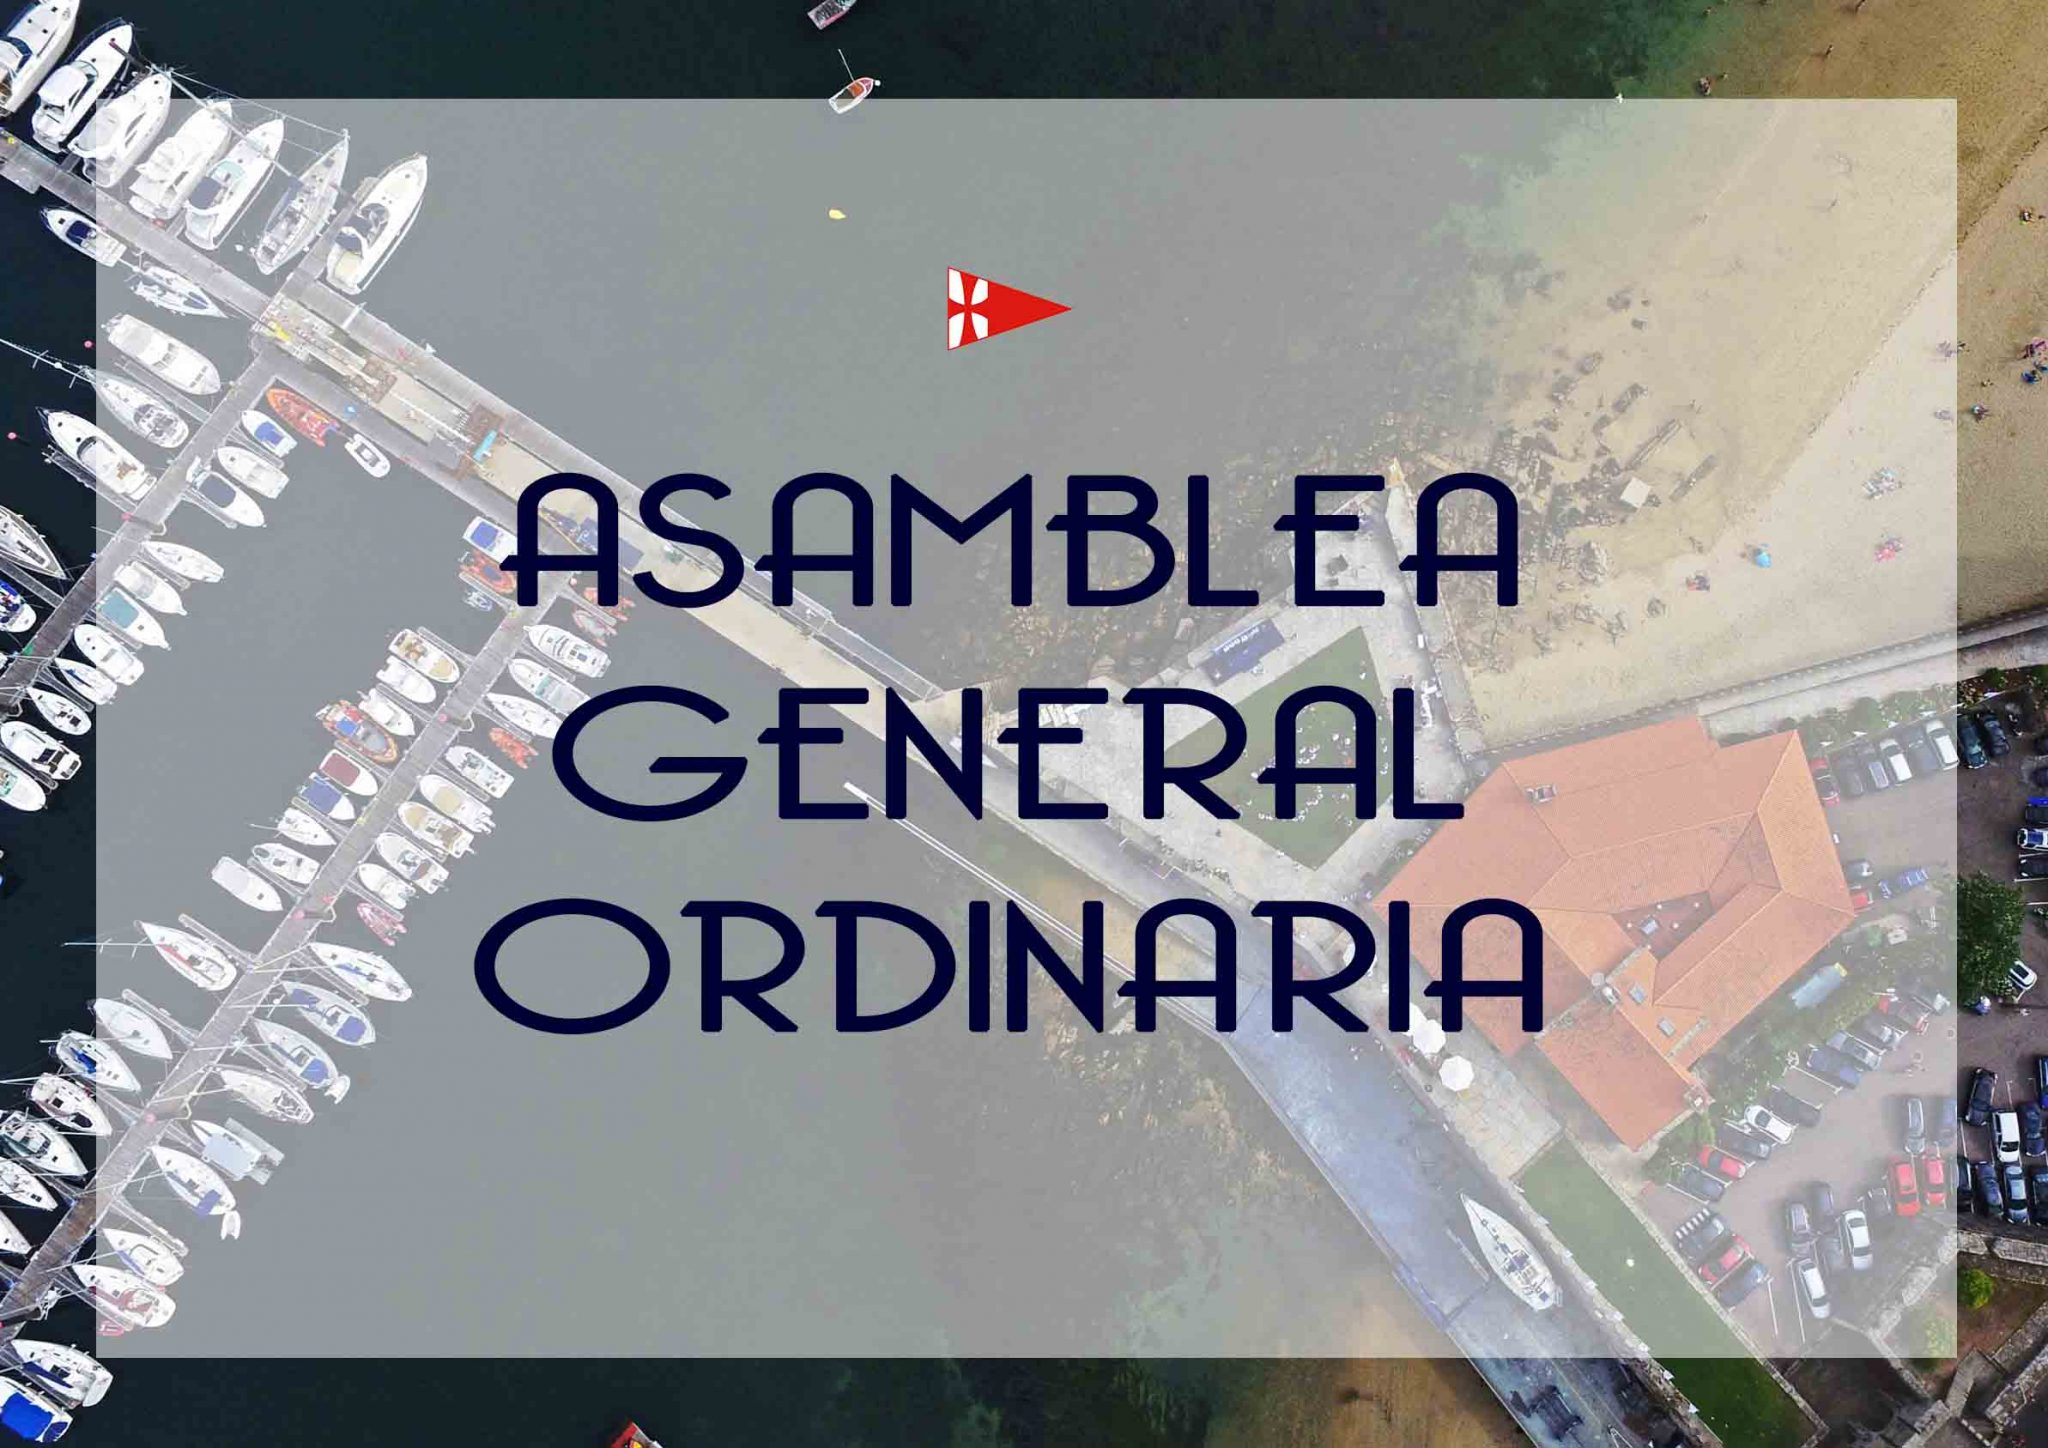 ASAMBLEA GENERAL ORDINARIA